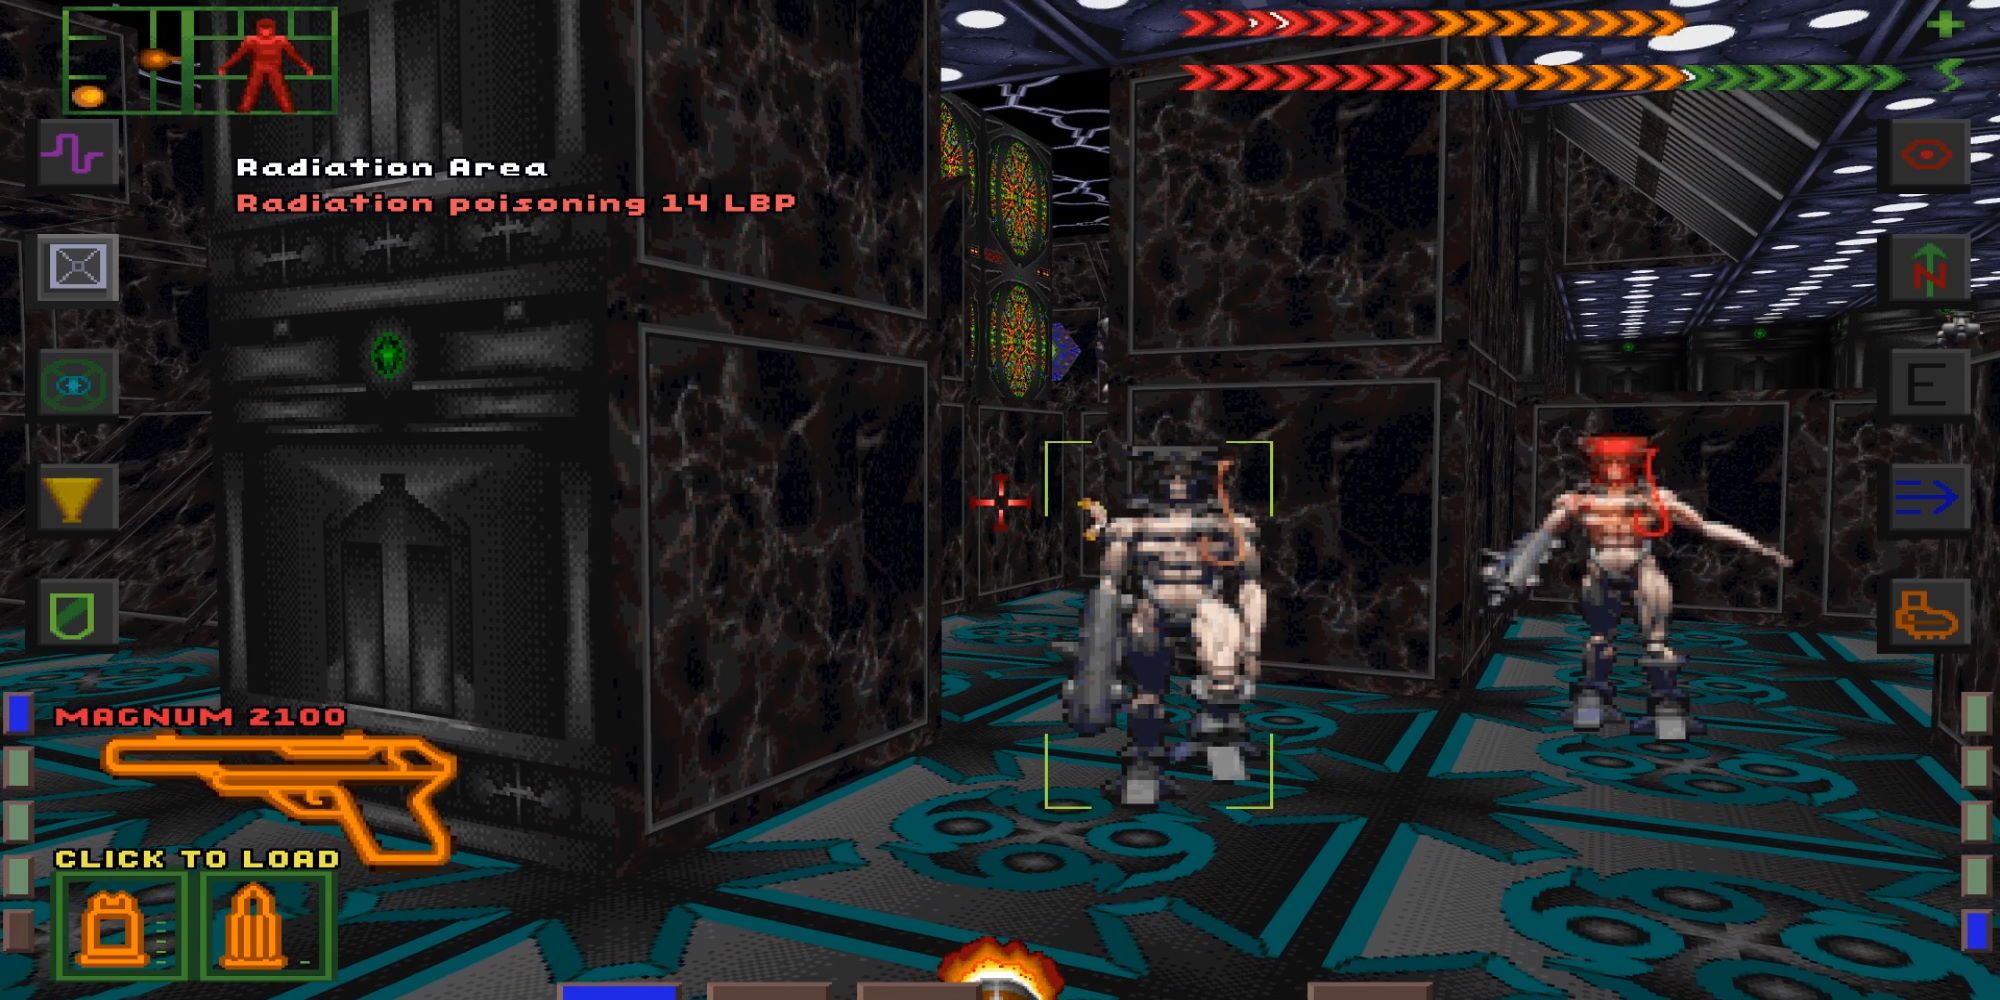 Shooting cyborg enemies in a futuristic setting